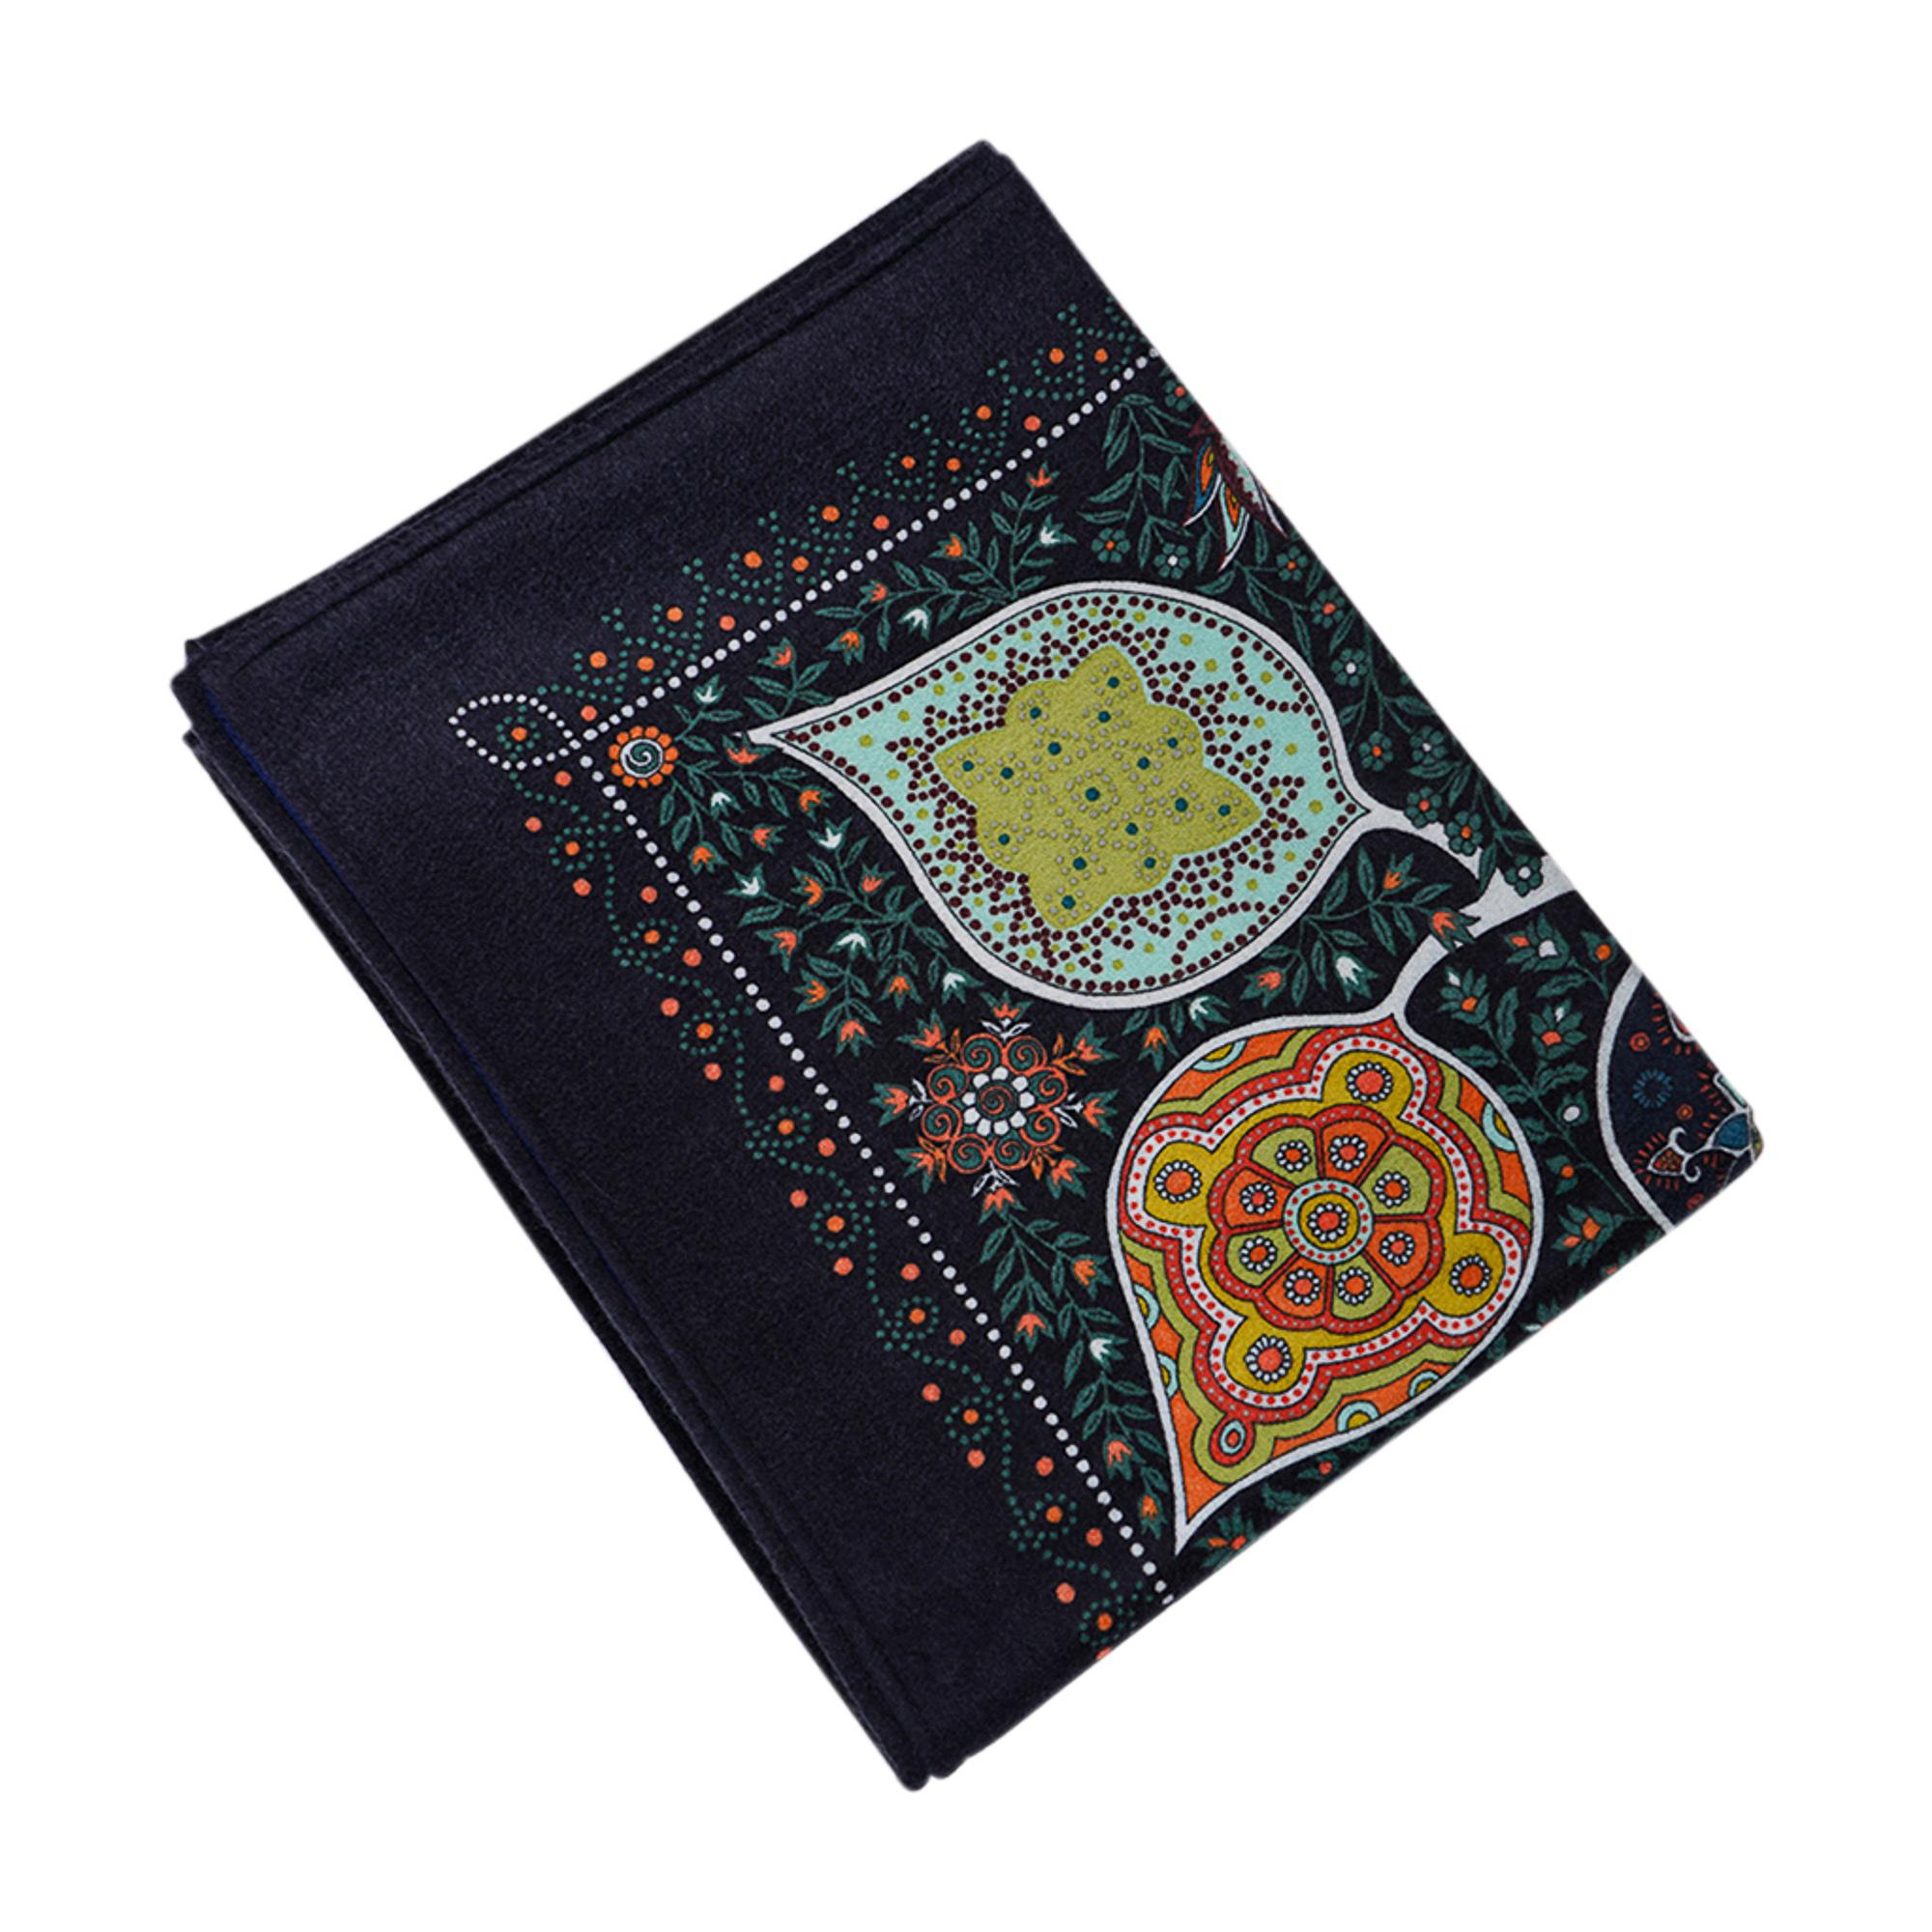 Hermes Blanket Tree of Life Blanket Multicolored Cashmere / Silk New 3